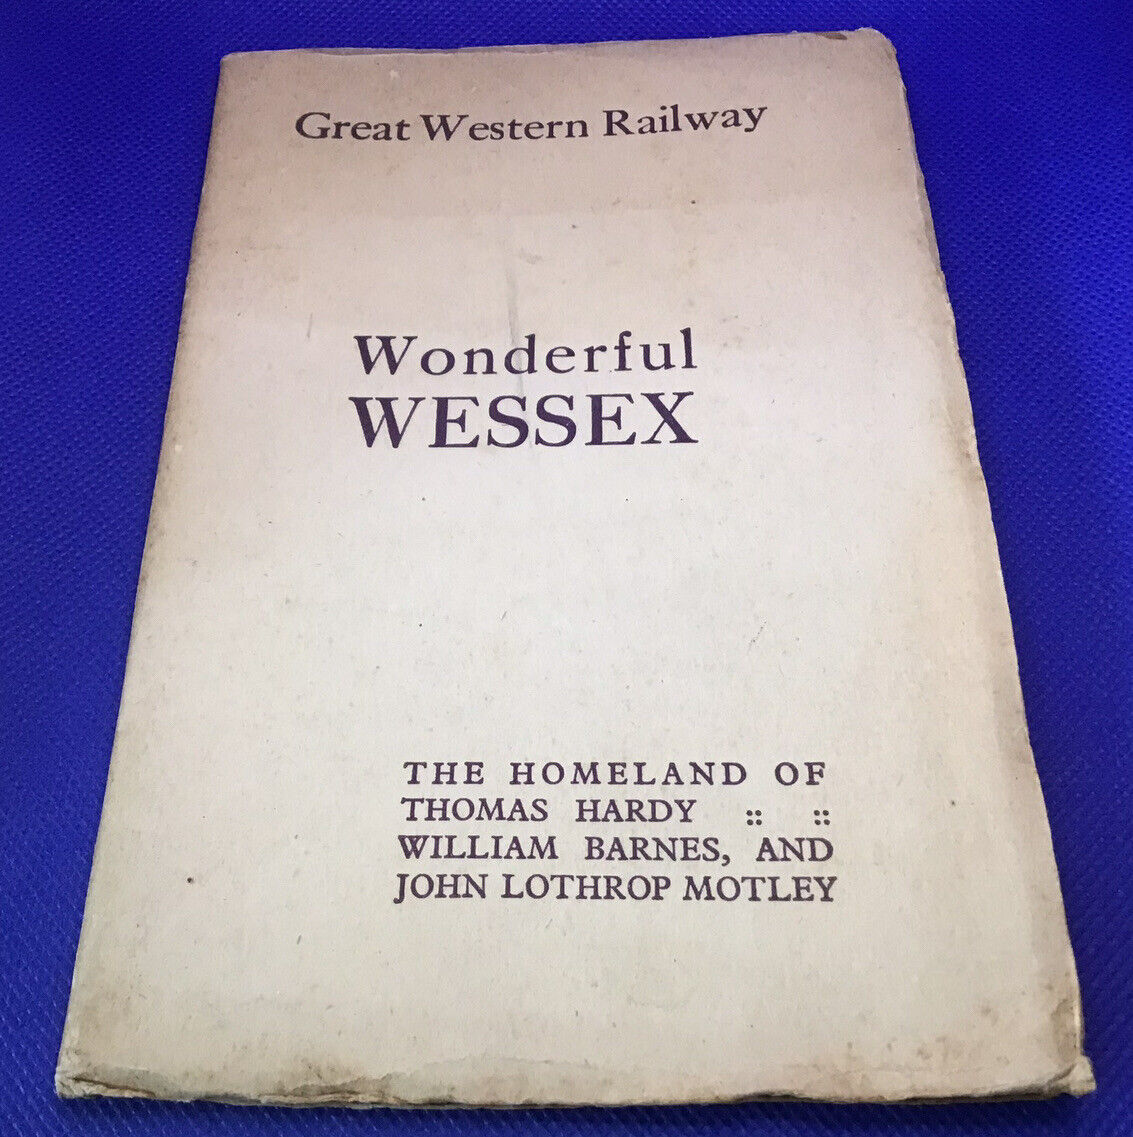 ANTIQUE BOOK Great Western Railway 1923 Wonderful Wessex MAP Railroad London